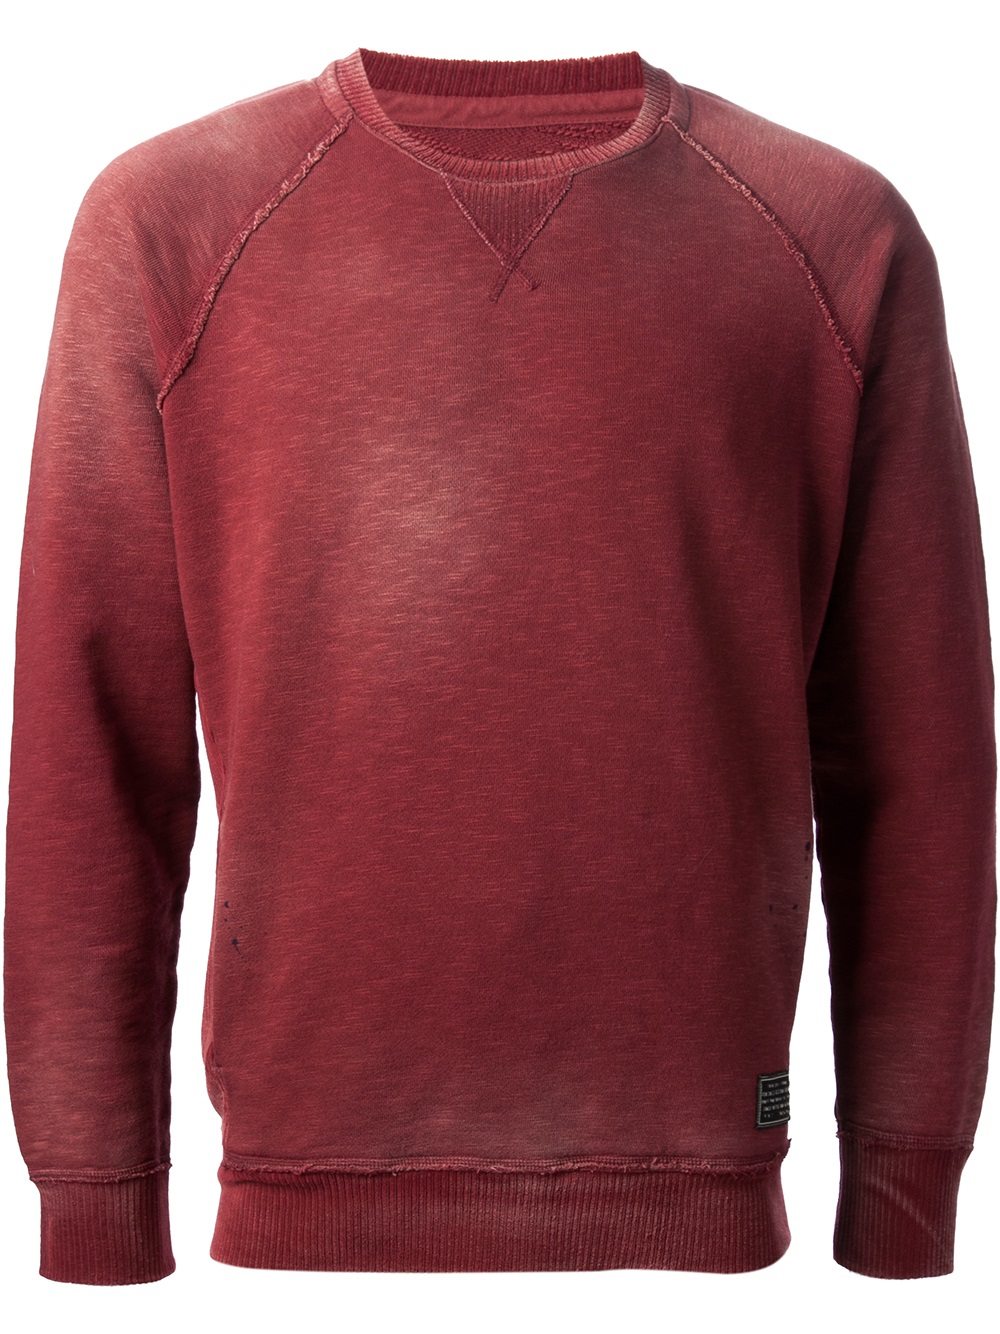 Lyst - DIESEL Faded Red Sweatshirt in Red for Men